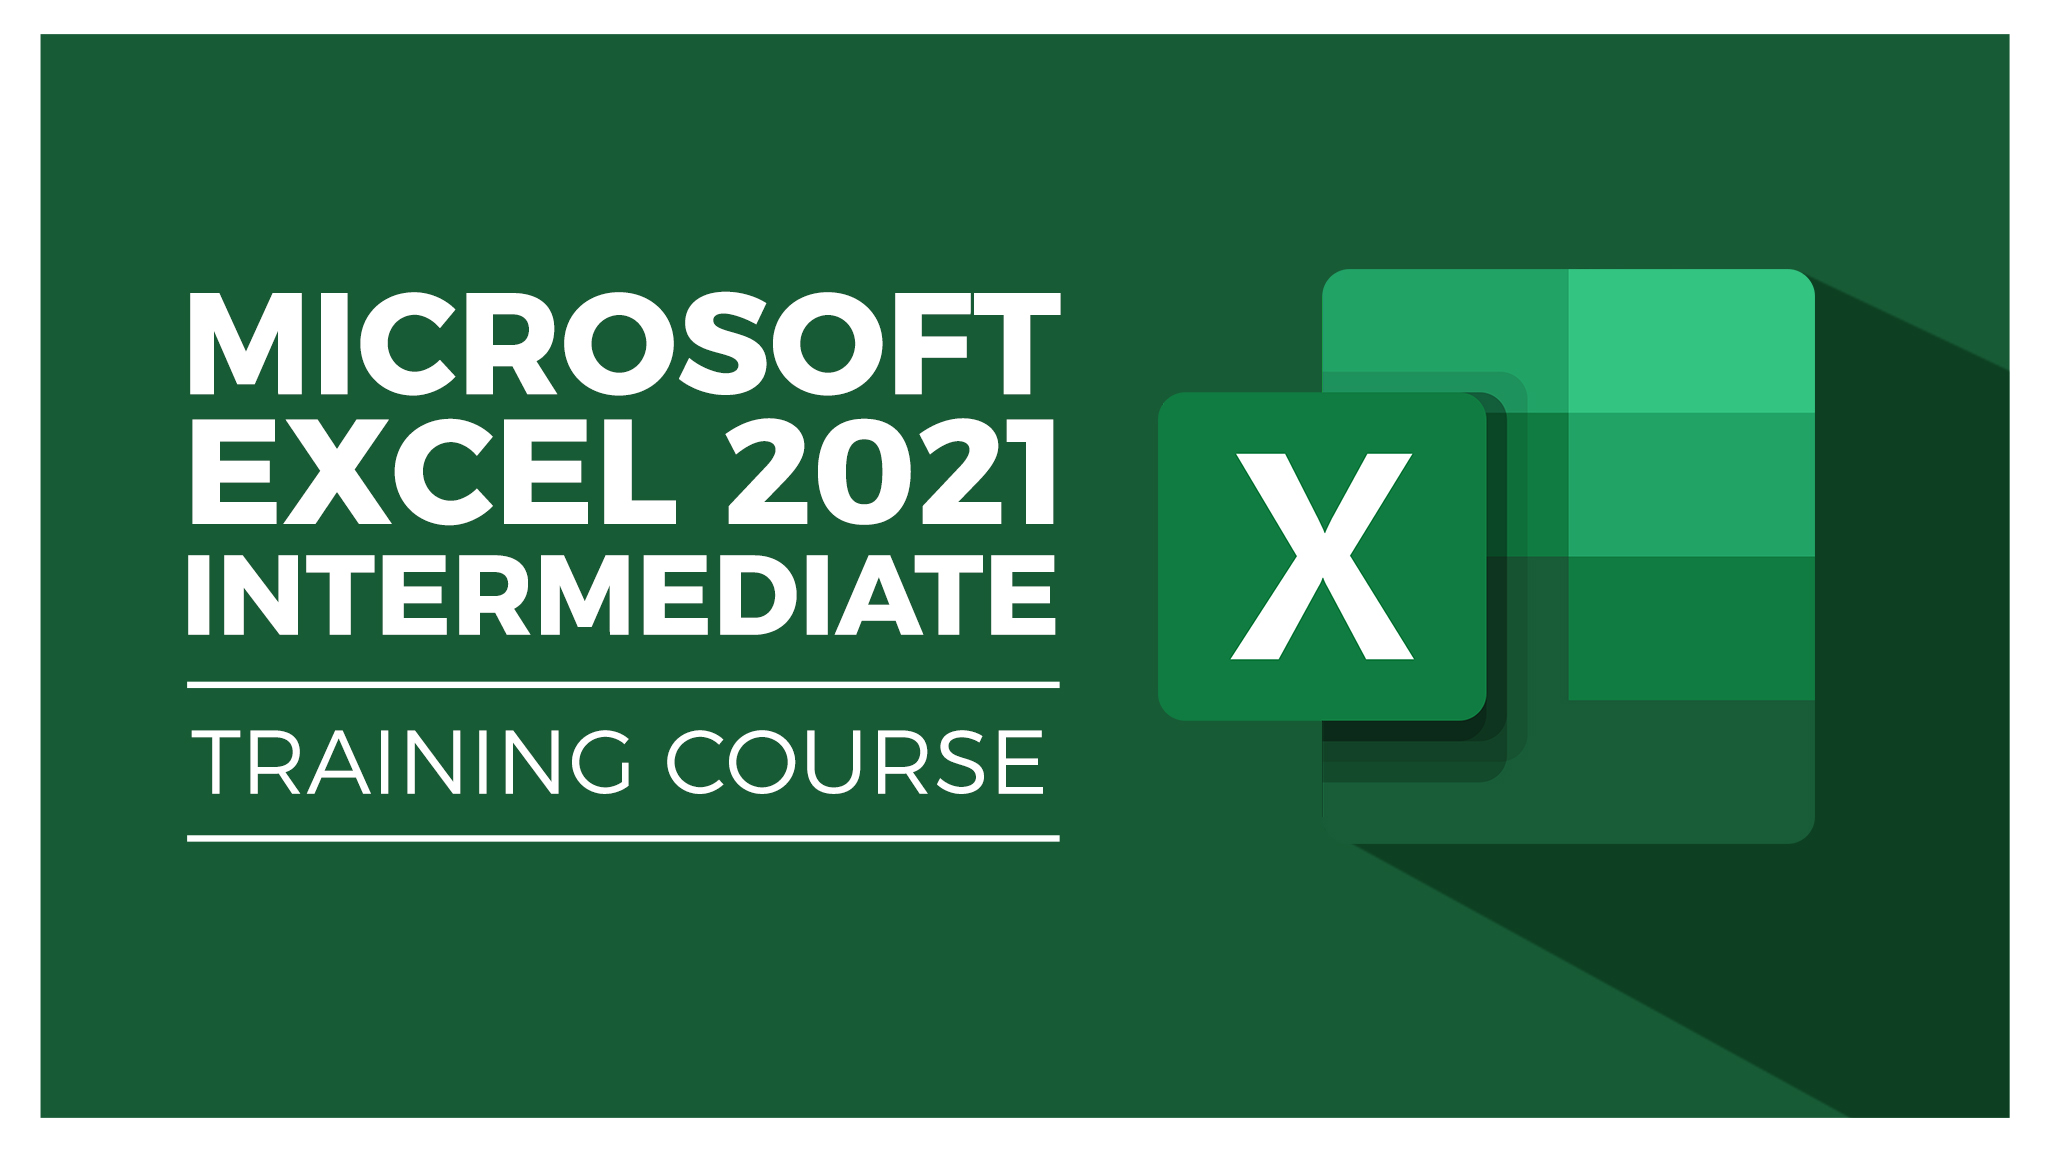 Microsoft Excel 2021 Intermediate Training Course | Stream Skill